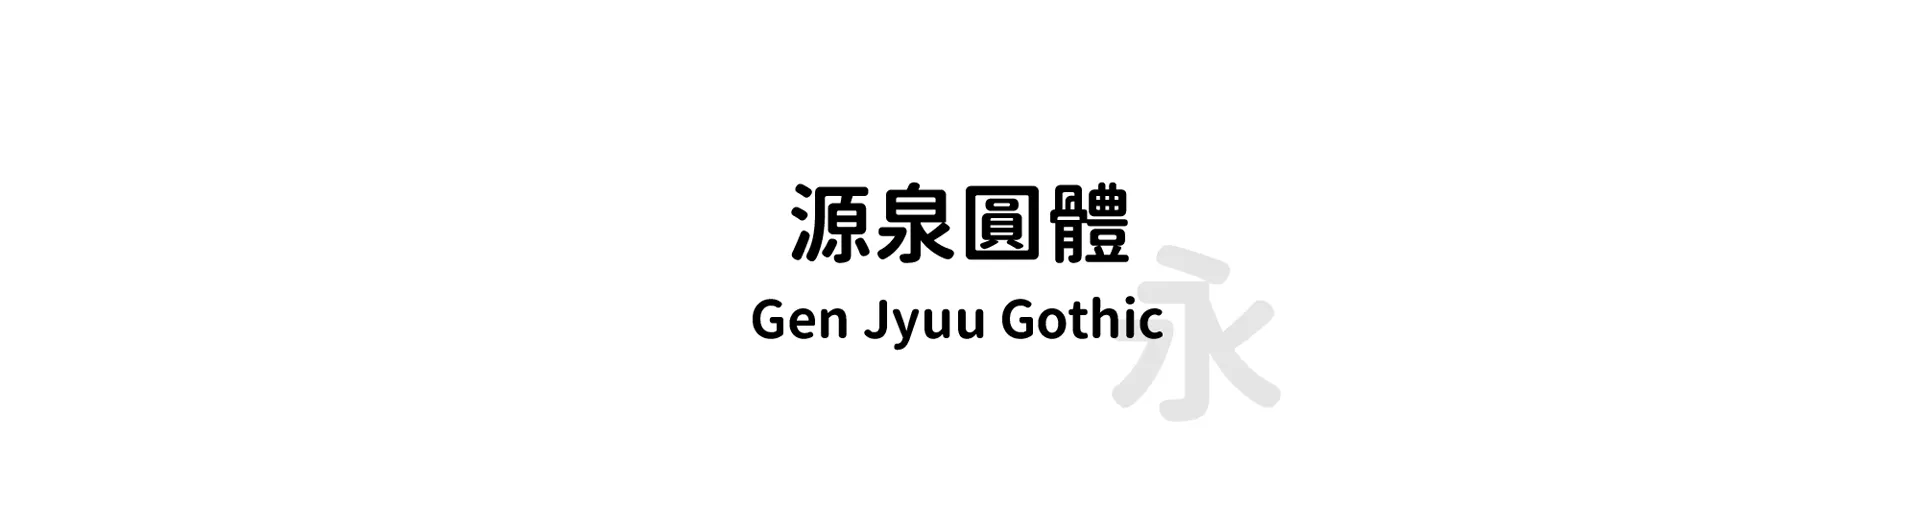 Gen Jyuu Gothic